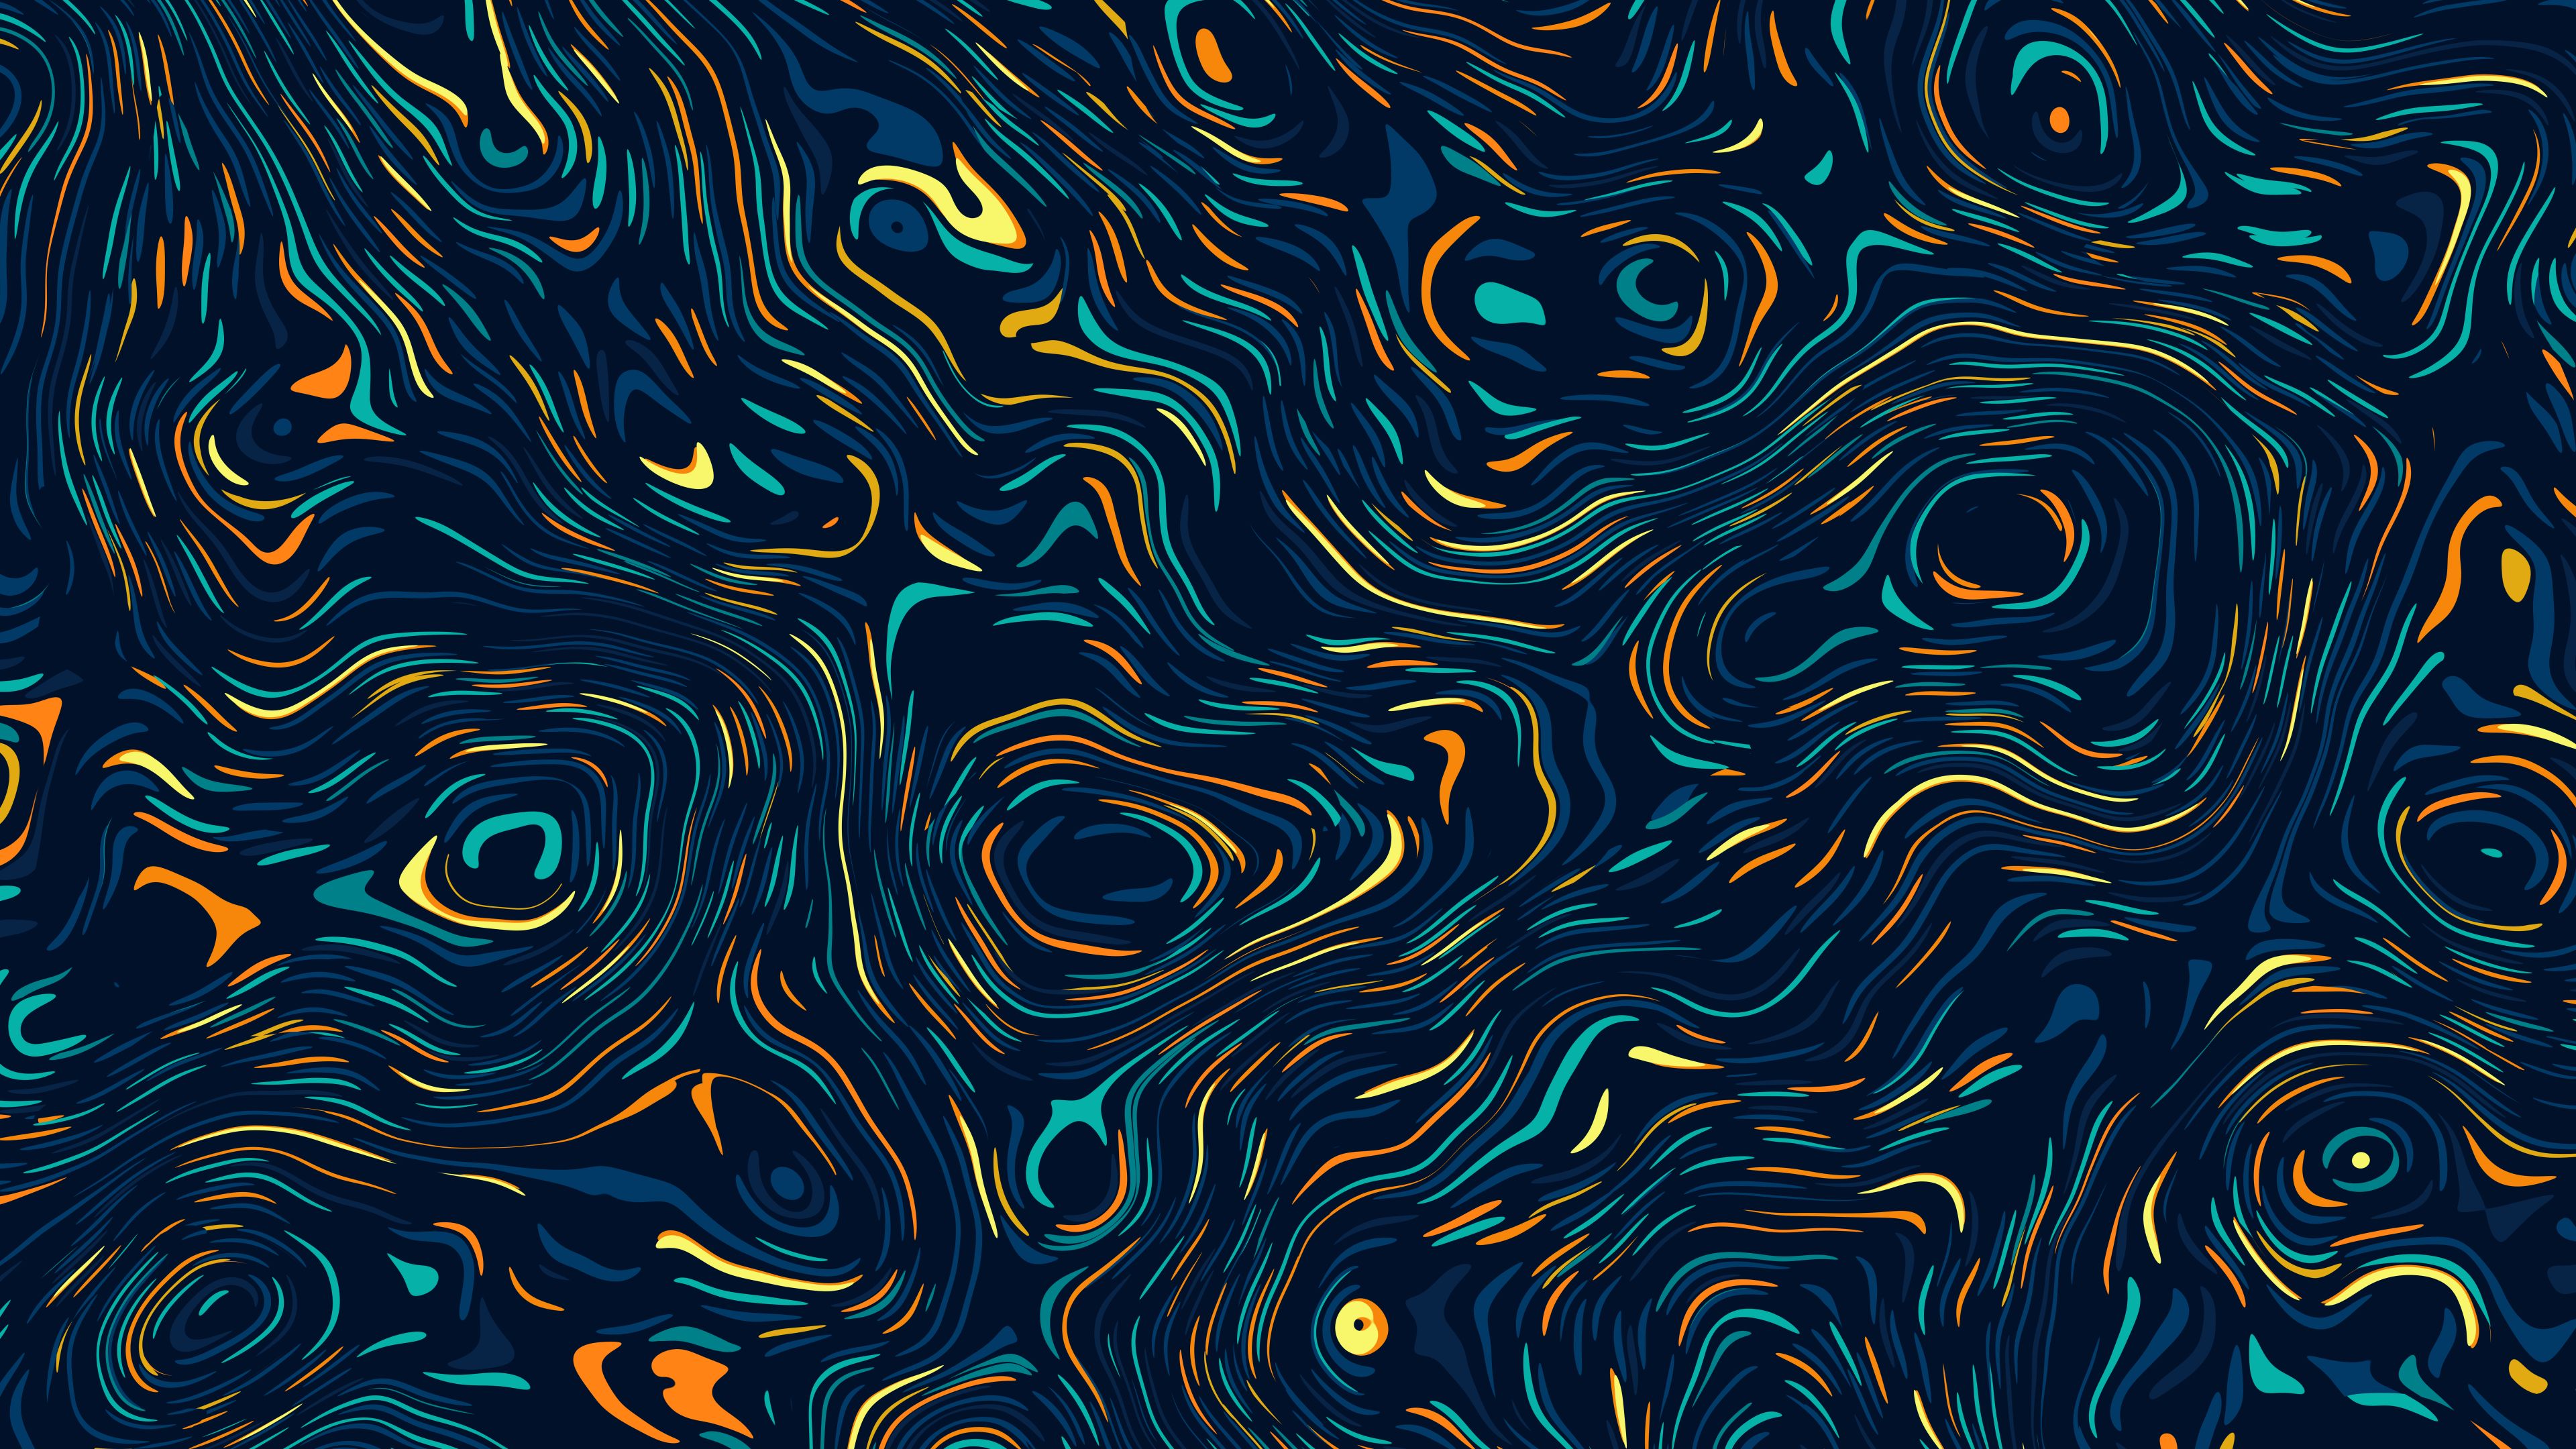 New Cool Swirl 4k Art Wallpaper, HD Artist 4K Wallpapers, Image